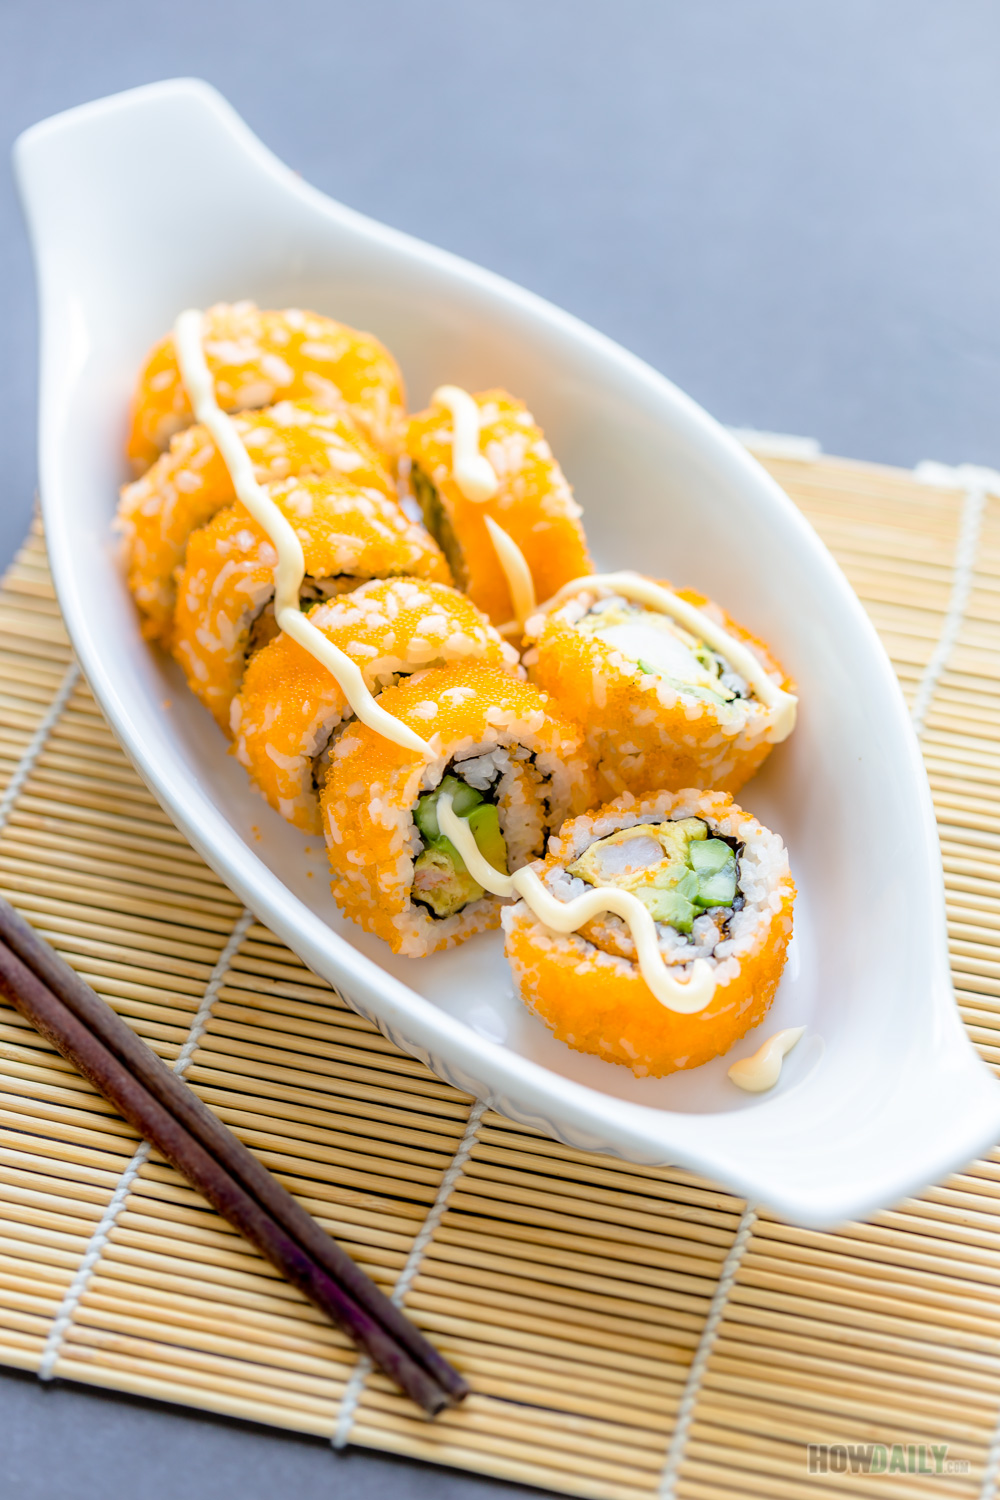 Boston Roll Recipe - Sushi Made from Shrimp, Avocado & Cucumber